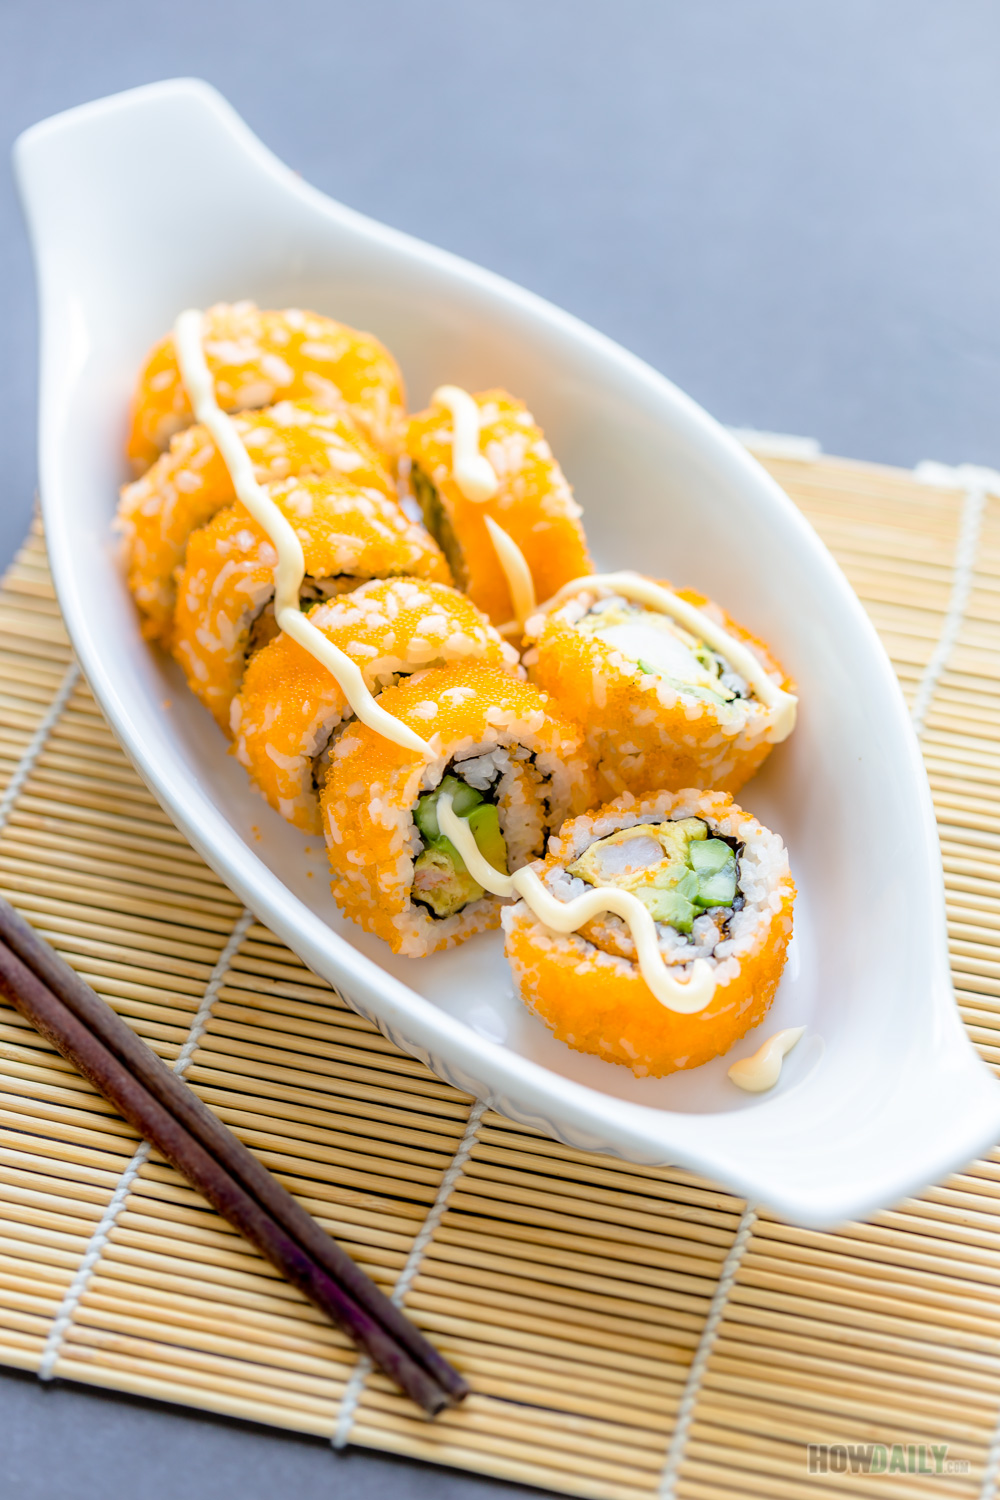 Boston Roll Recipe - Sushi Made from Shrimp, Avocado & Cucumber